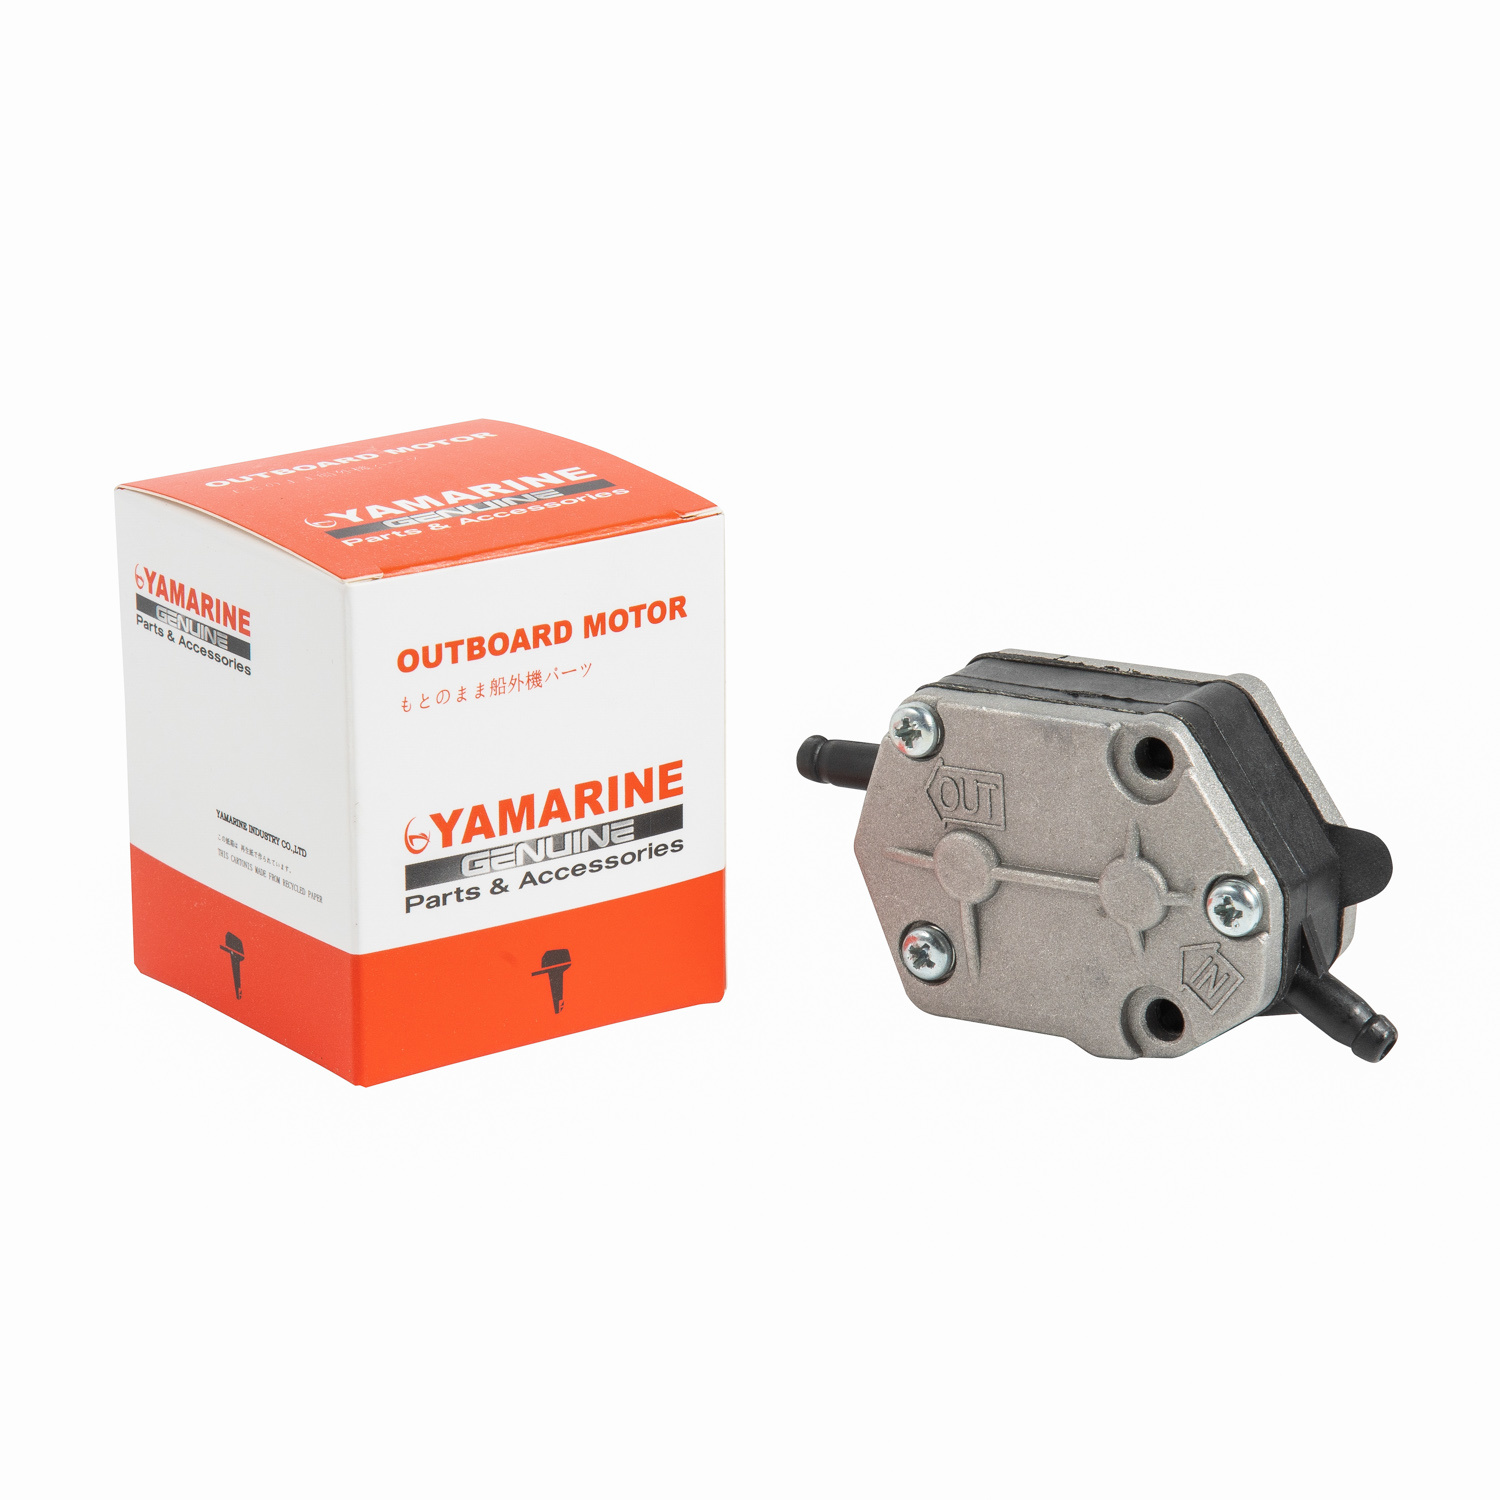 YAMAHA Outboard Fuel Pump Gasket Kit 663-24411-00-00 & 692-24411-00-00, 18-7787 Diaphragm